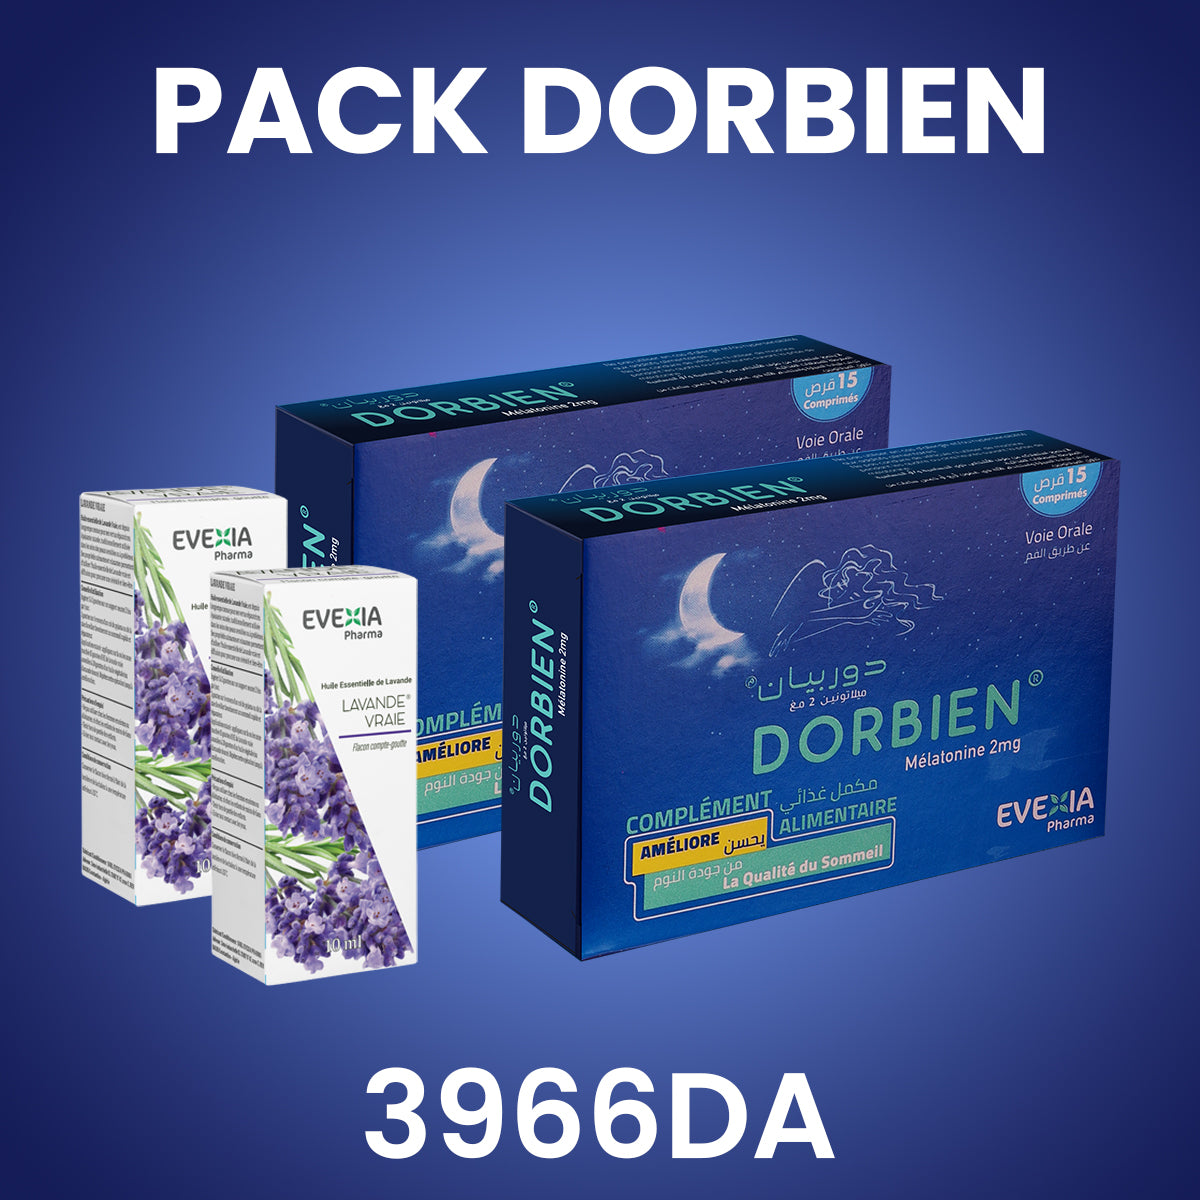 Dorbian Pack